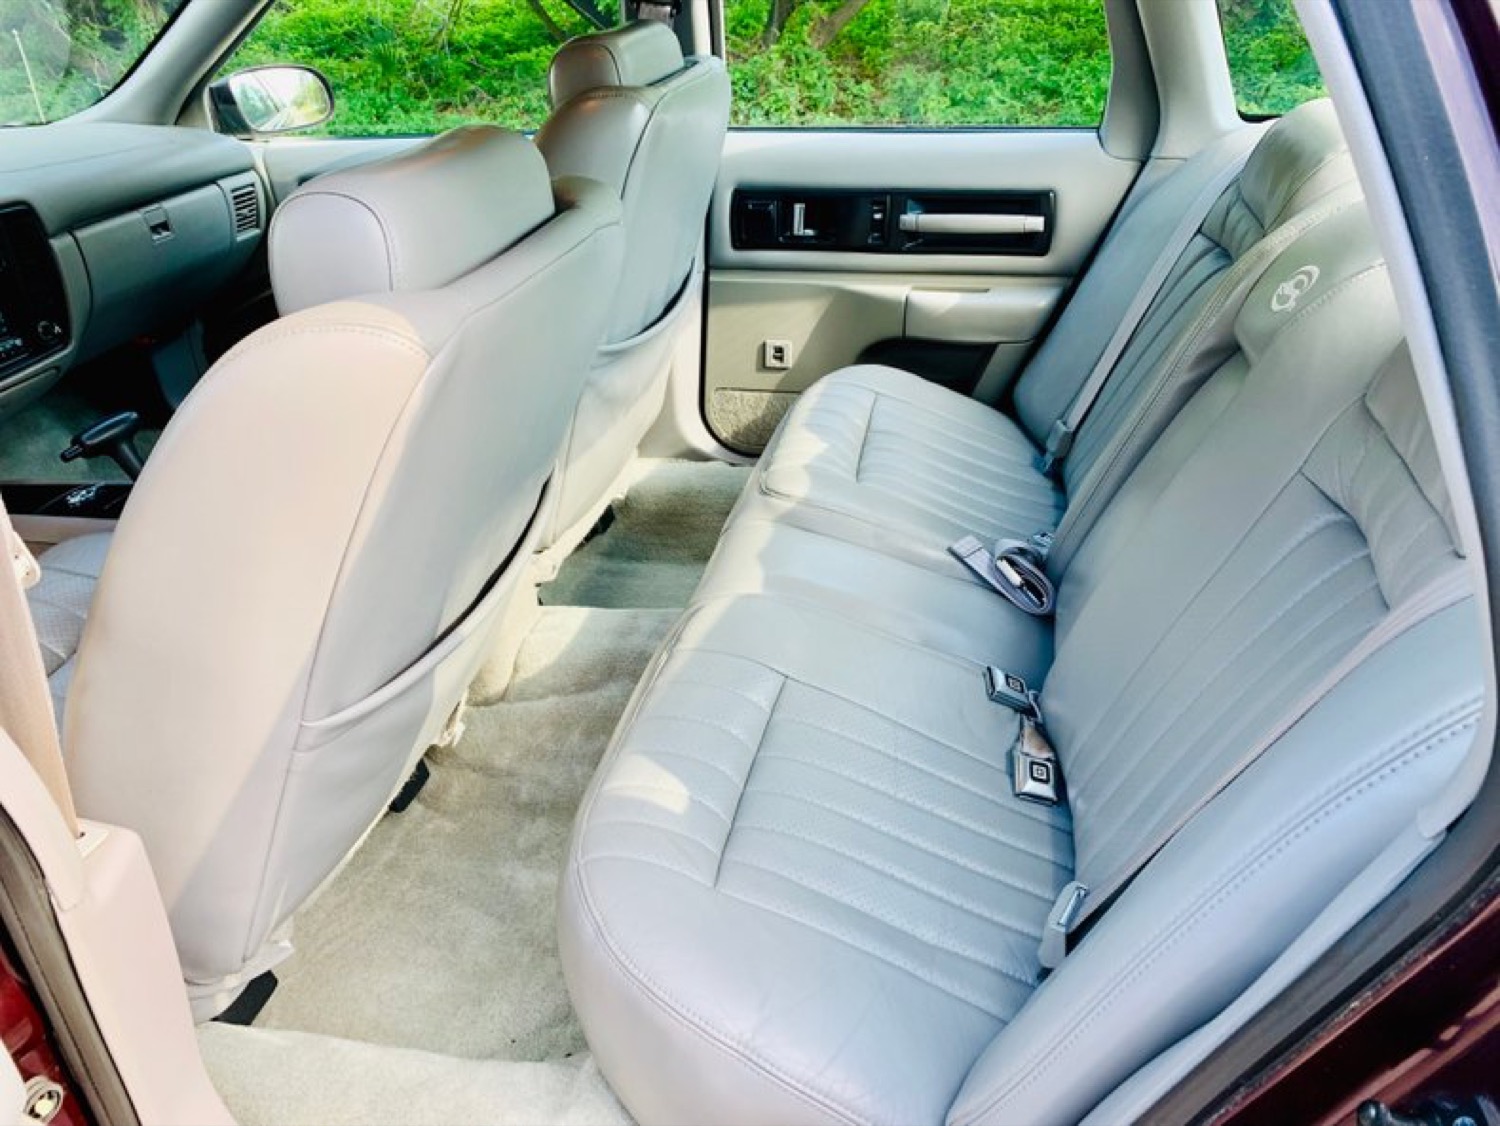 1996 Chevrolet Impala Ss Interior 003 Gm Authority